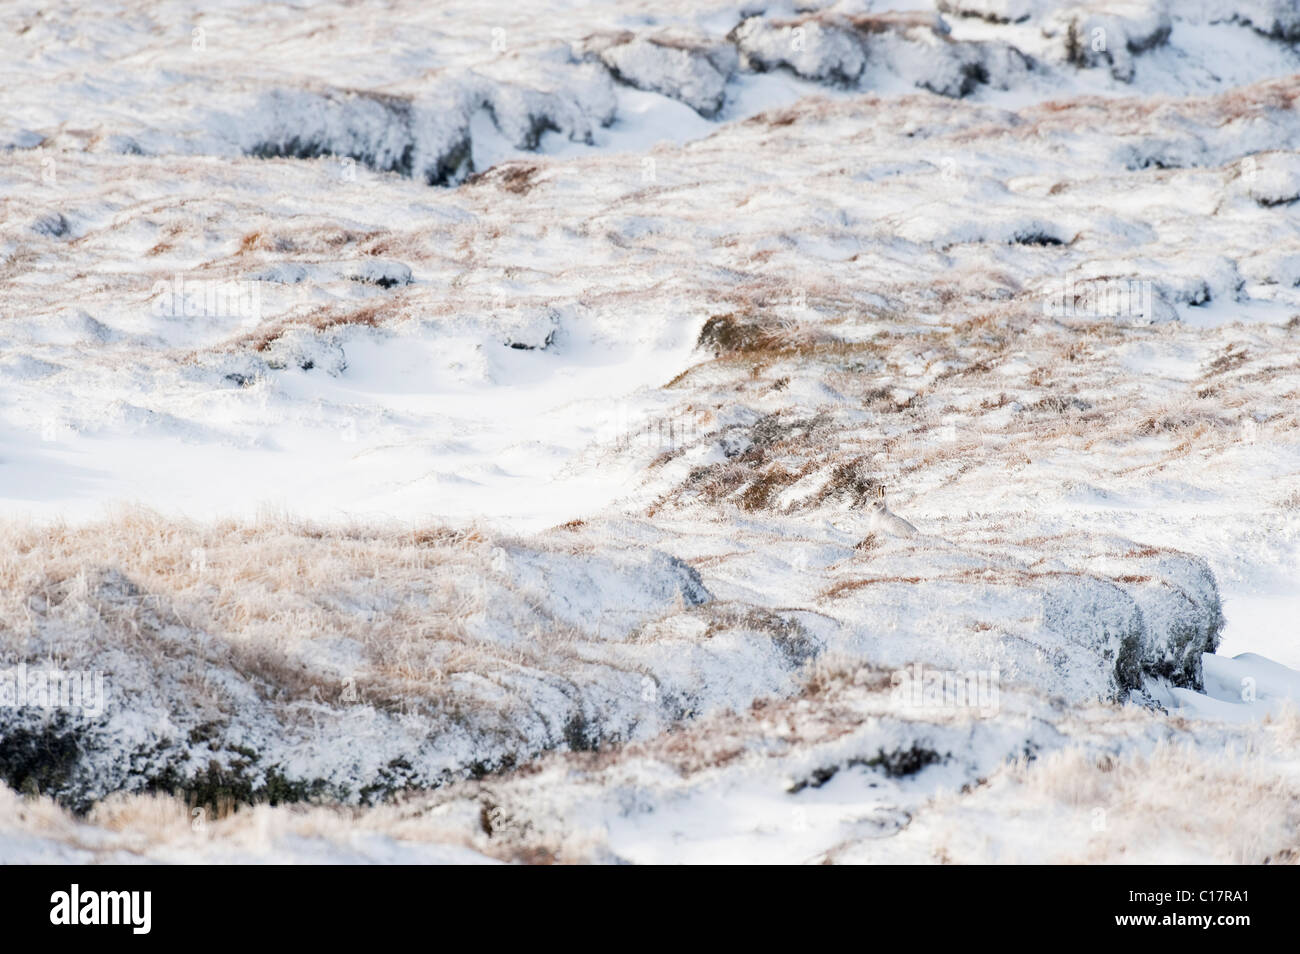 Mountain hare (Lepus timidus) in winter coat. Peak District, Derbyshire, UK Stock Photo